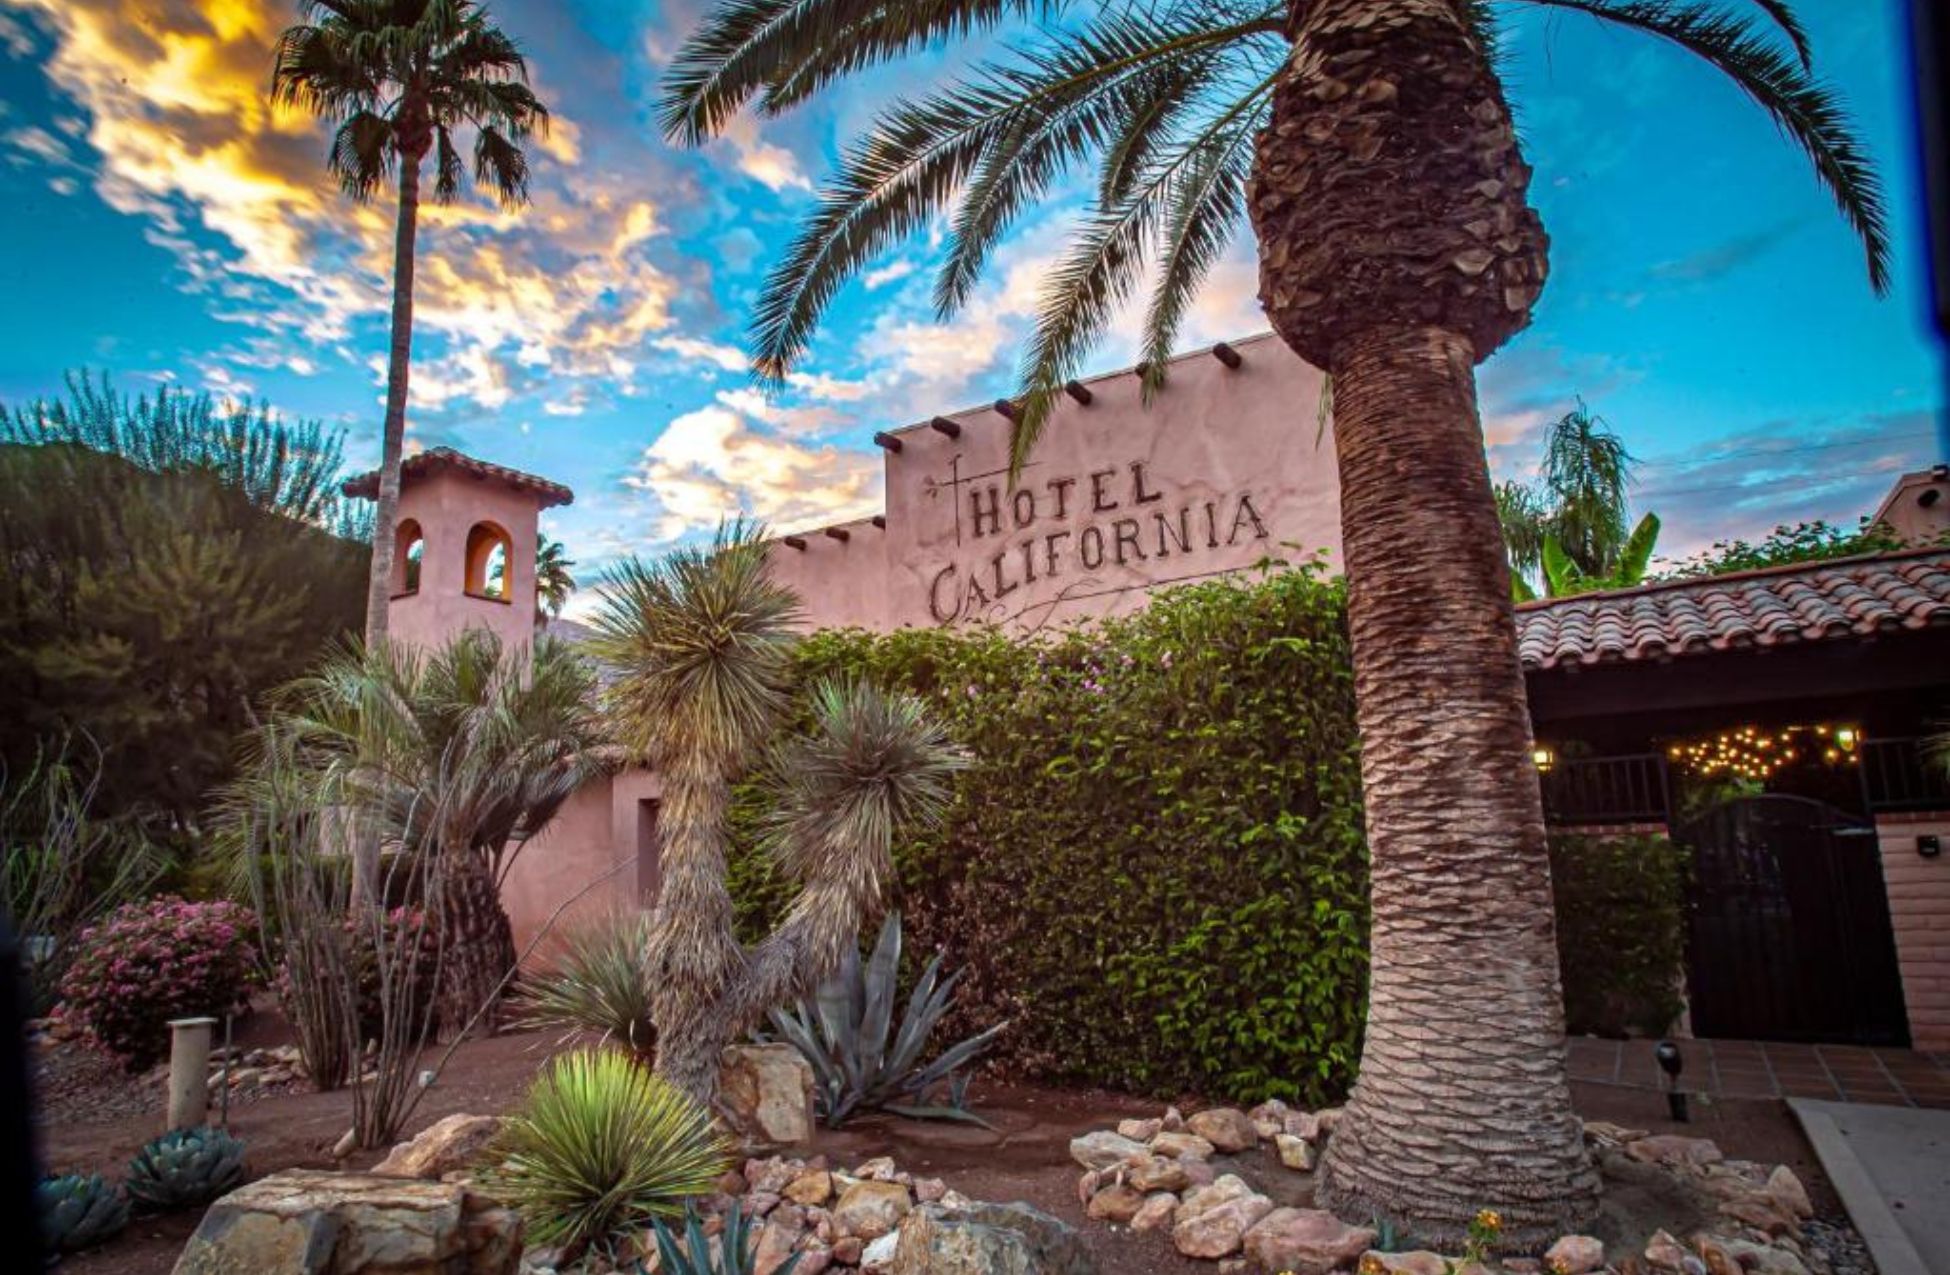 Hotel California - Best Hotels In Palm Springs